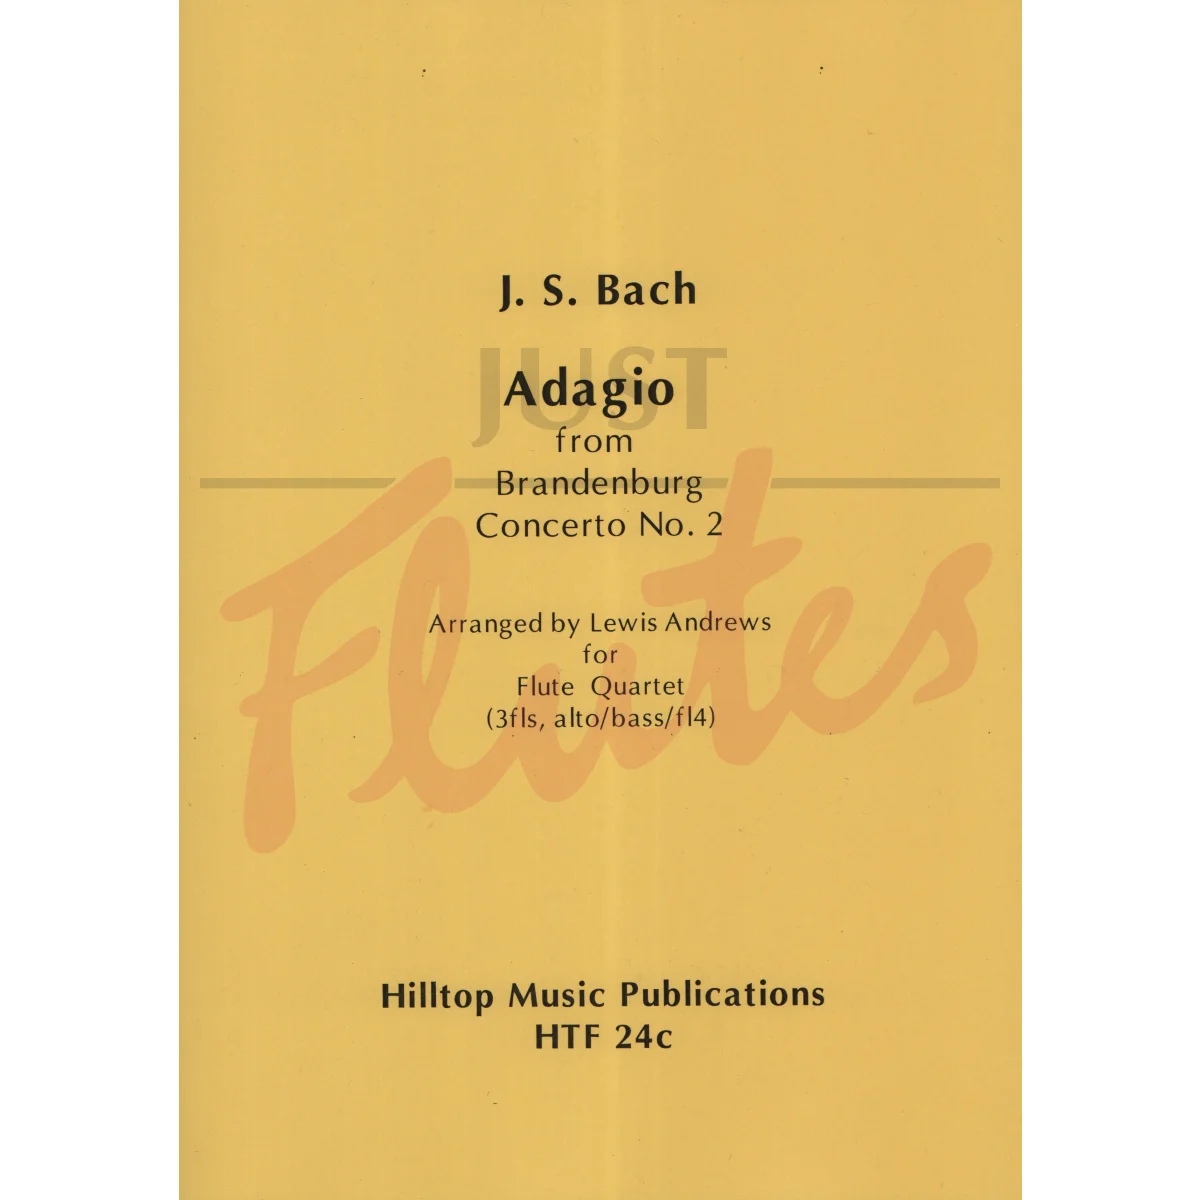 Adagio from Brandenburg Concerto No 2 for Flute Quartet